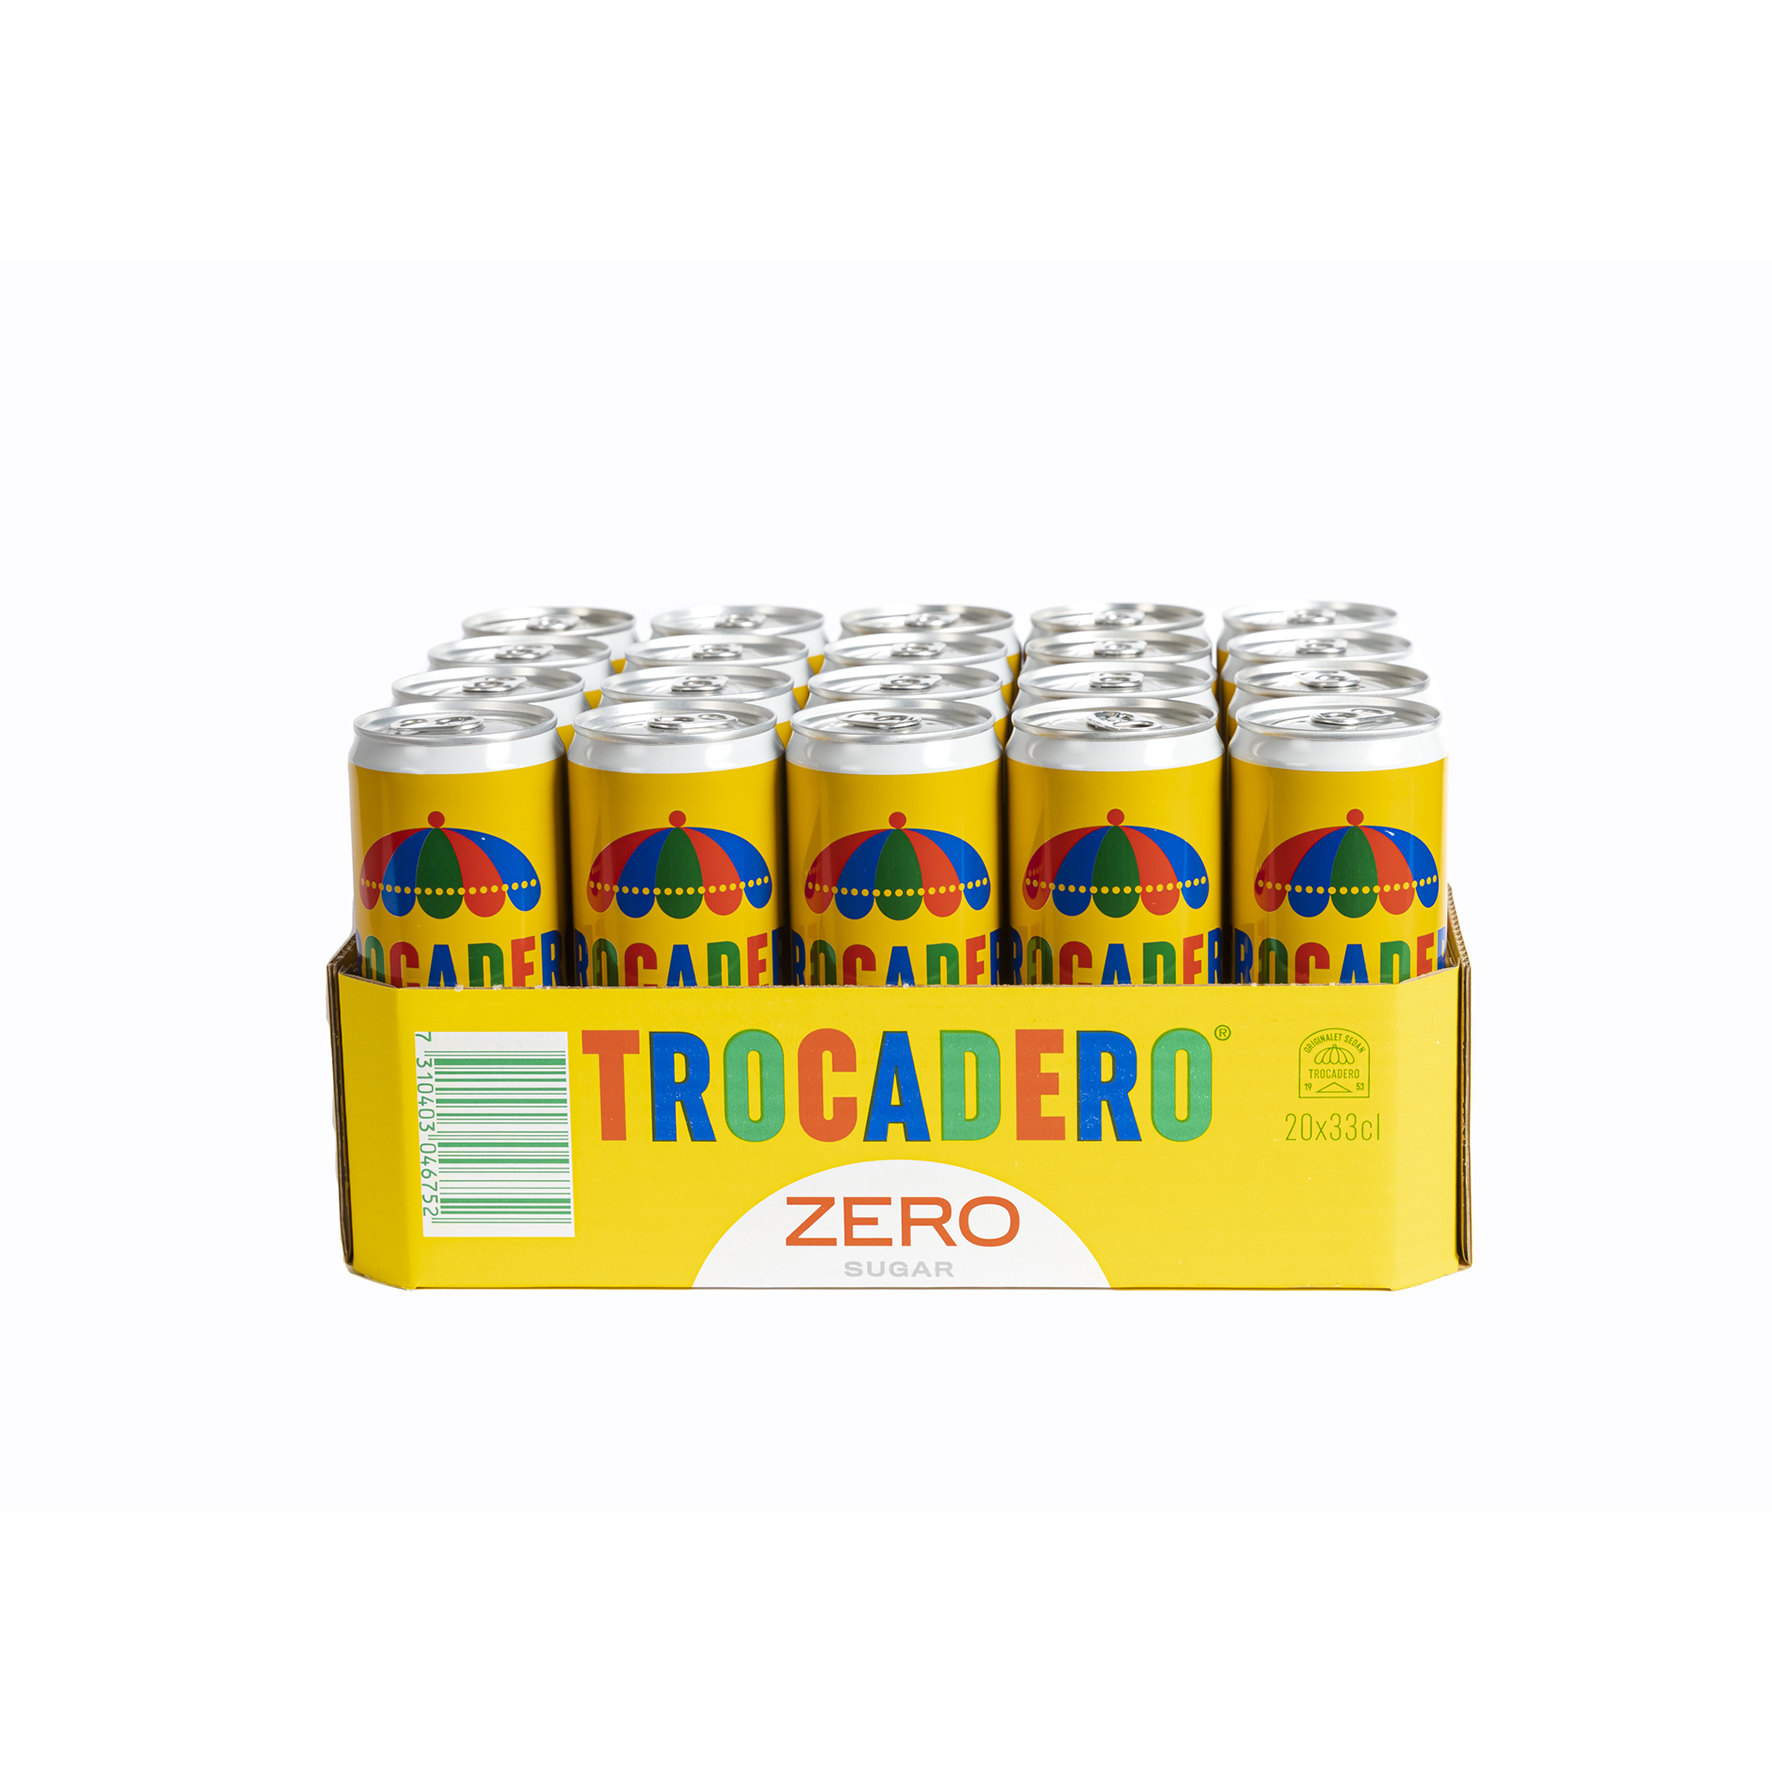 [8560083] Trocadero Zero 33cl sleek can